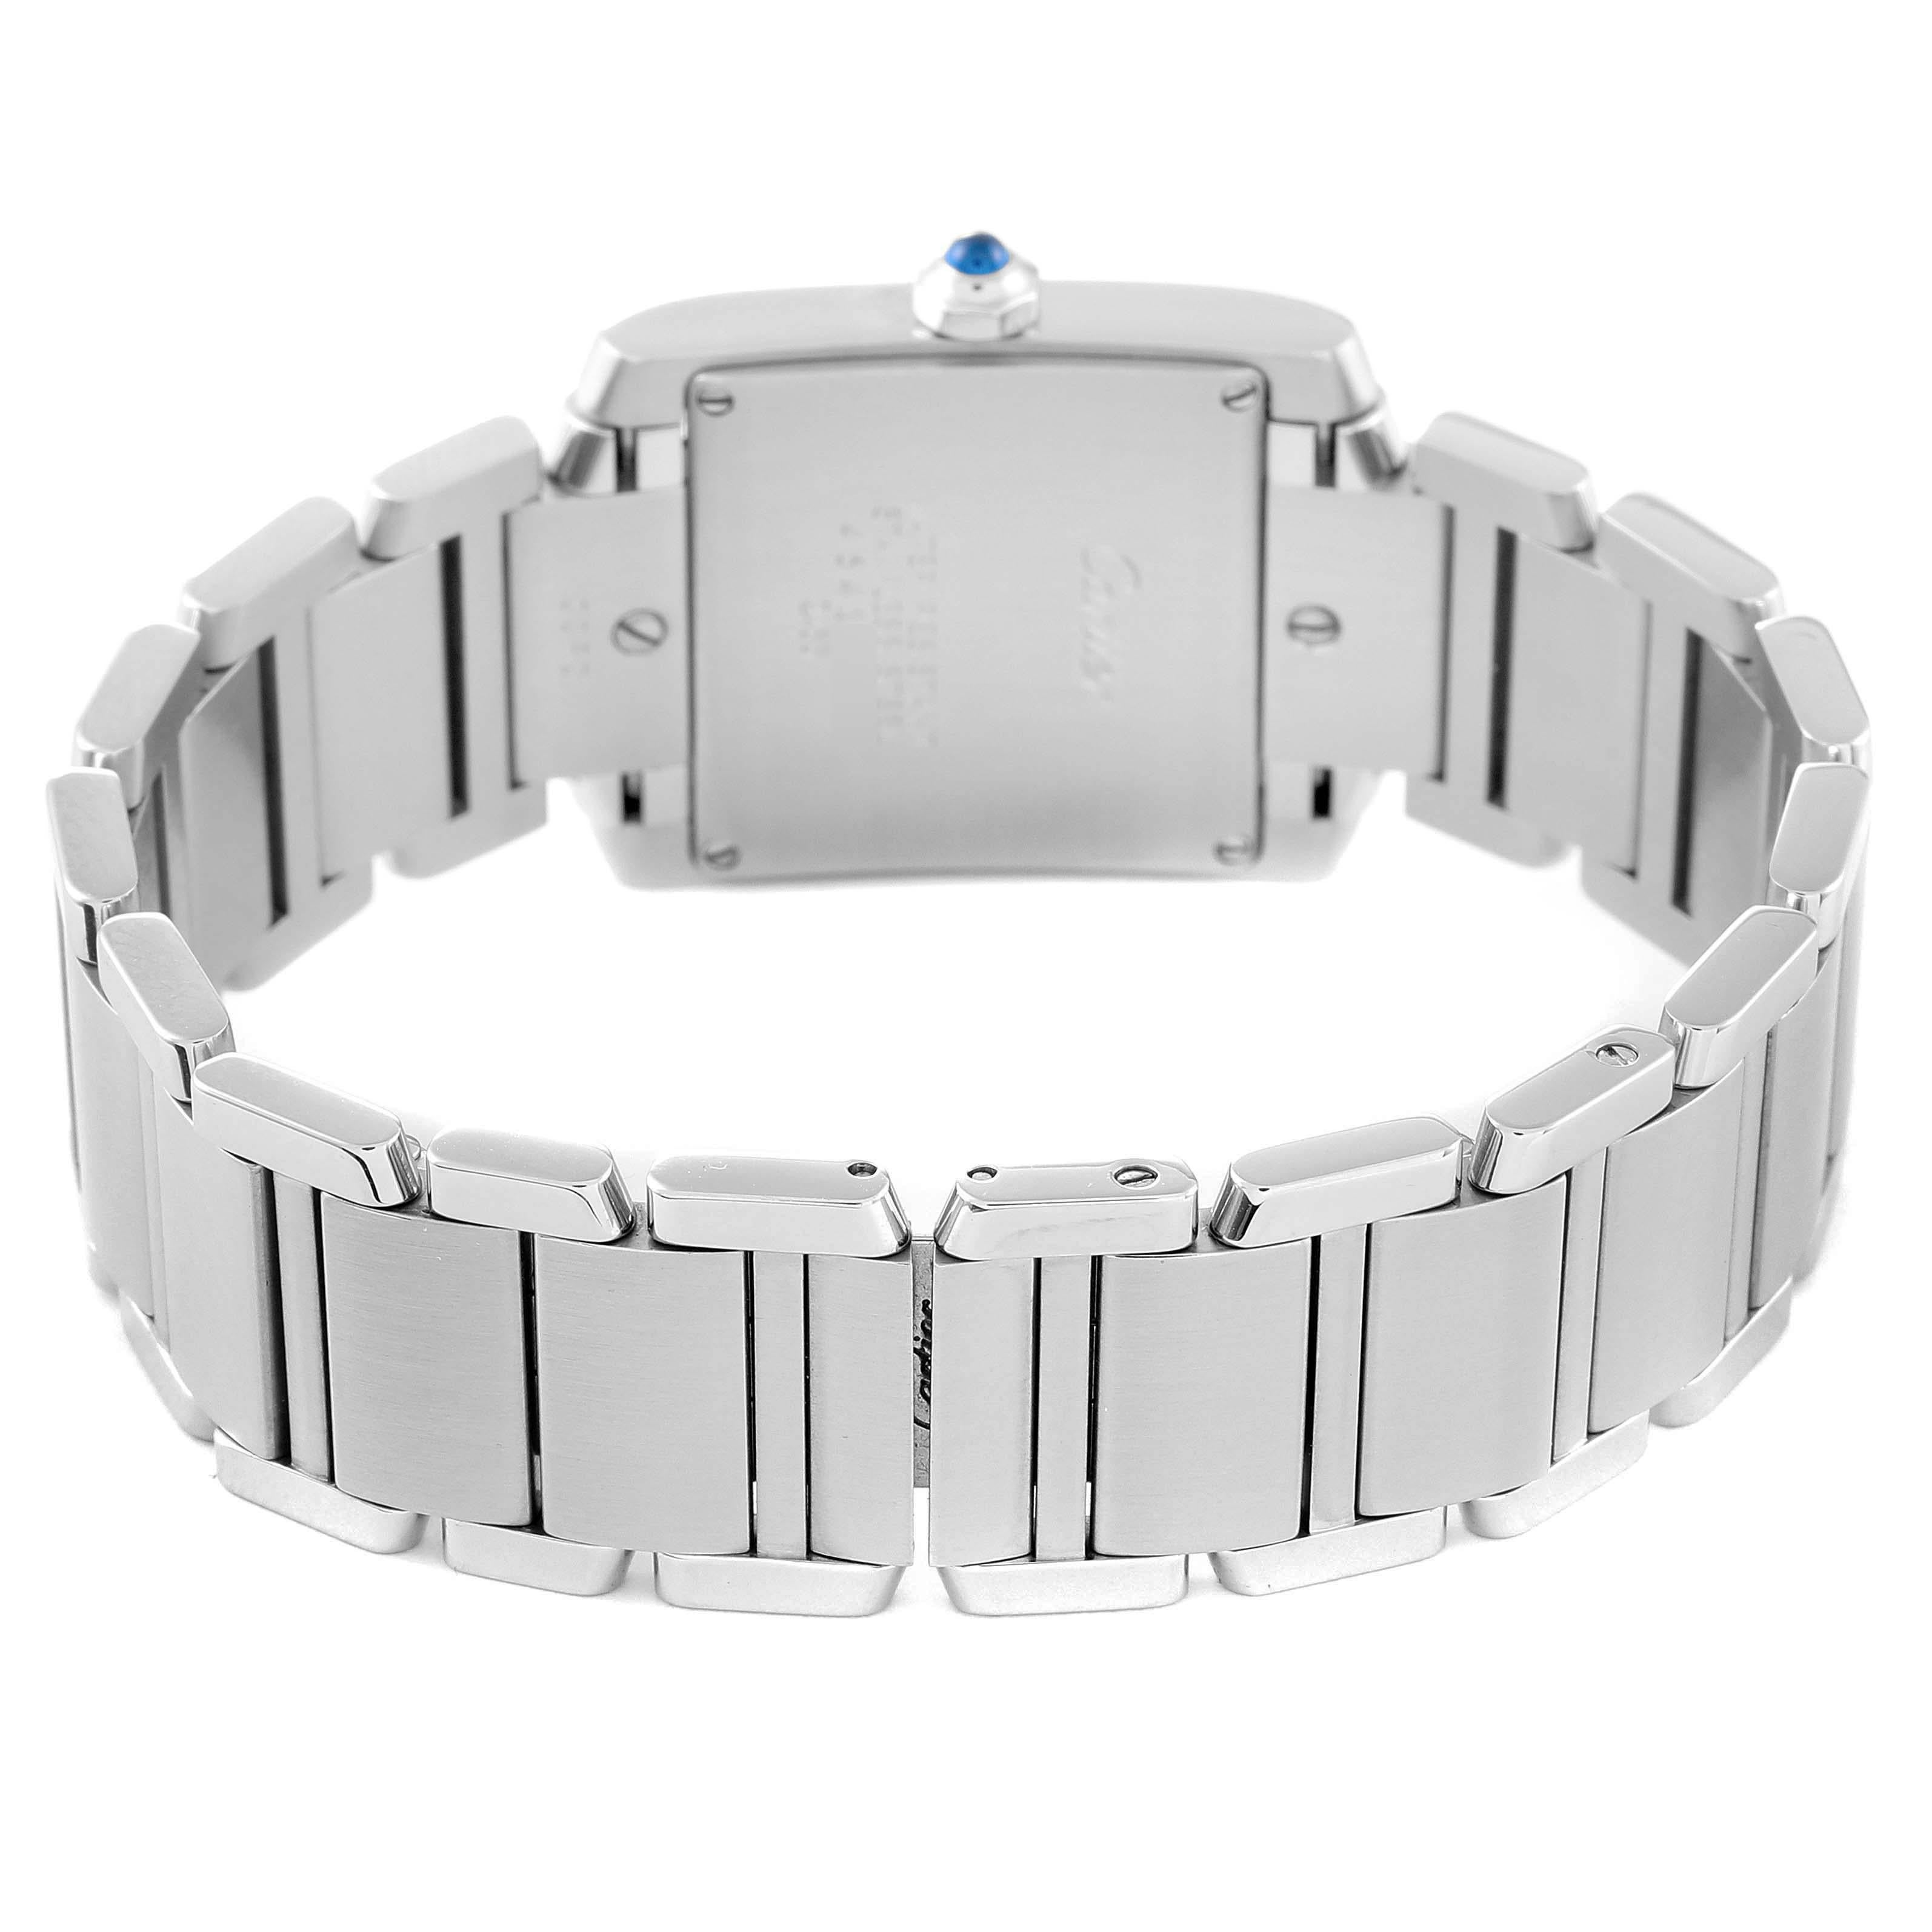 Cartier Tank Francaise Midsize Silver Dial Steel Ladies Watch W51003Q3 3